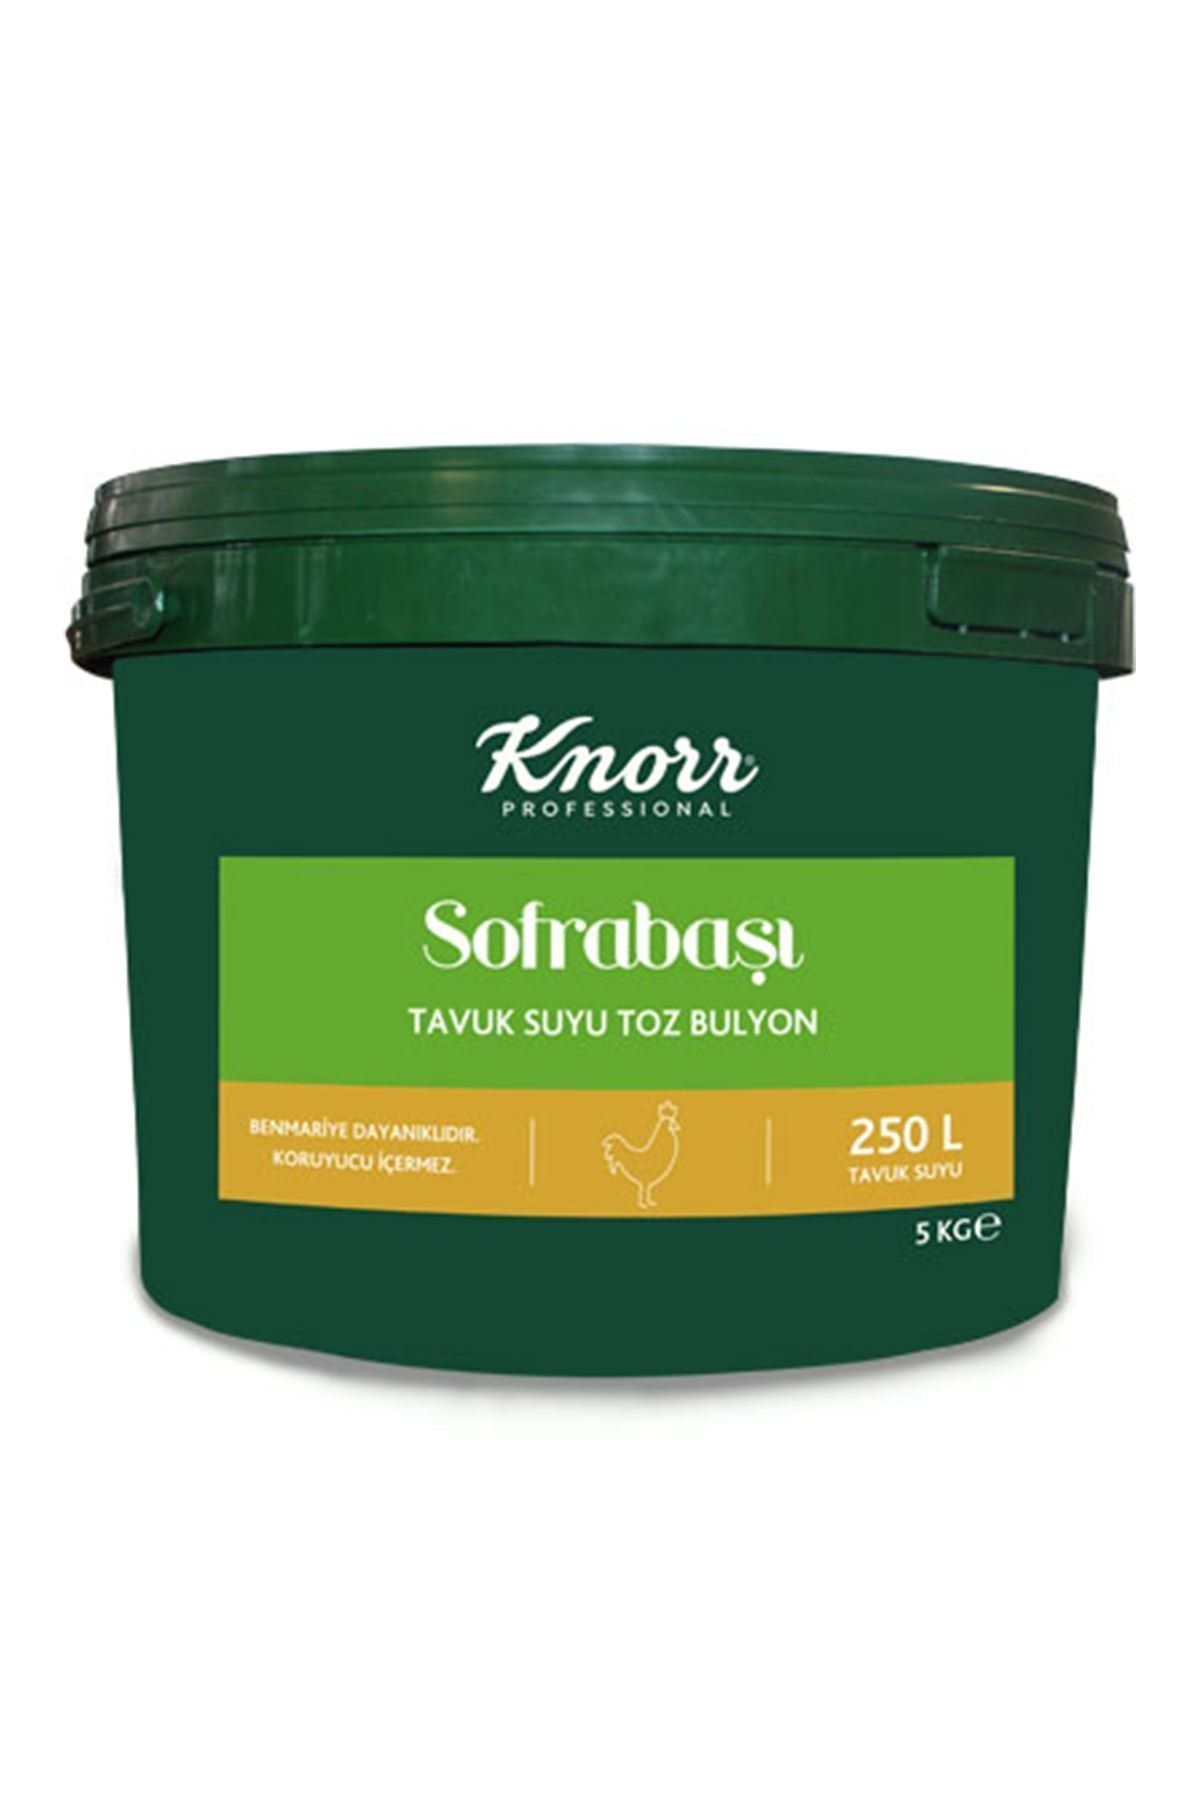 Knorr Sofrabaşı Tavuk Suyu Toz Bulyon 5 kg